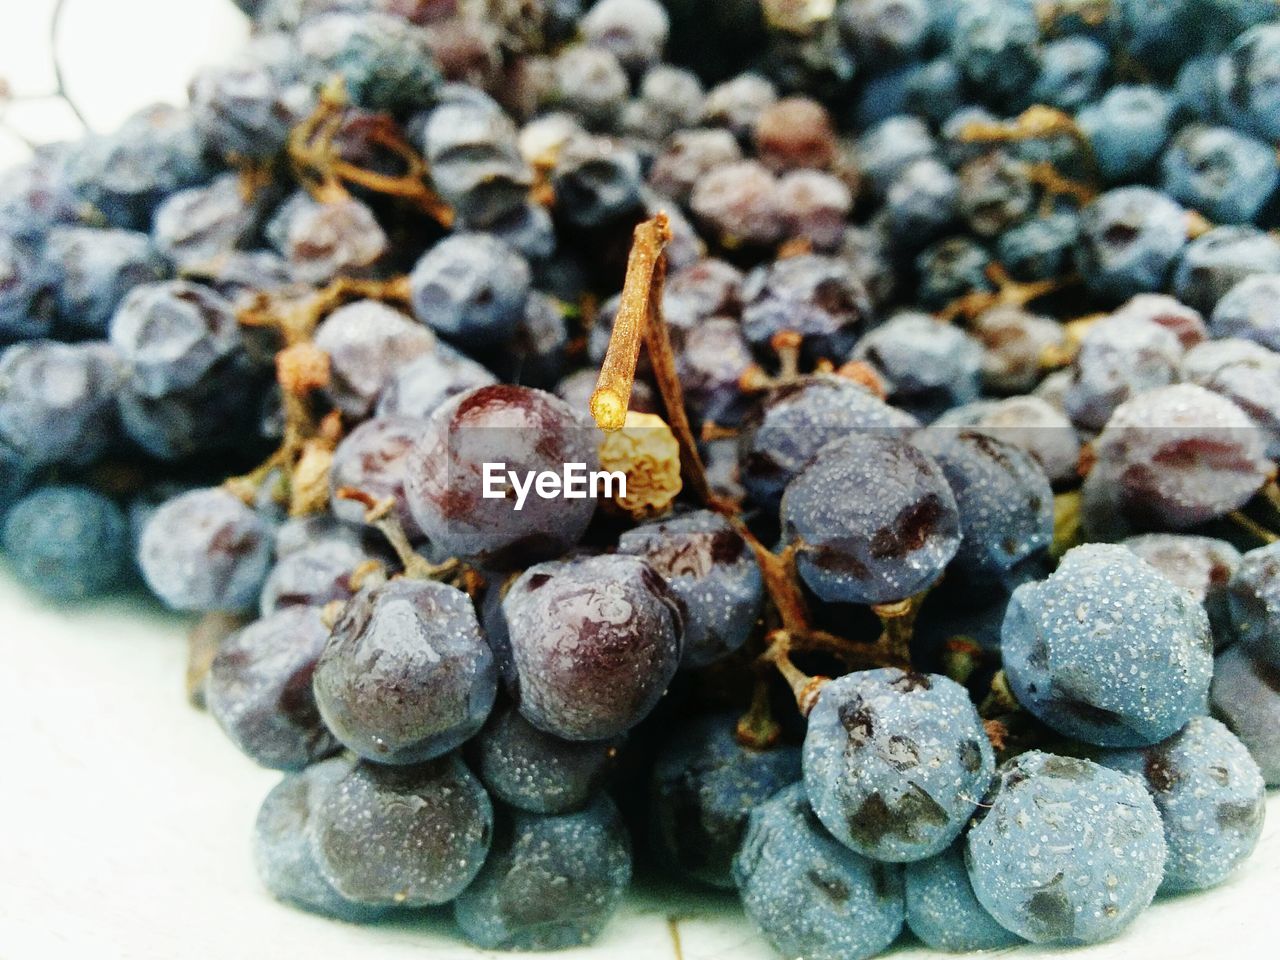 Close-up of black grapes